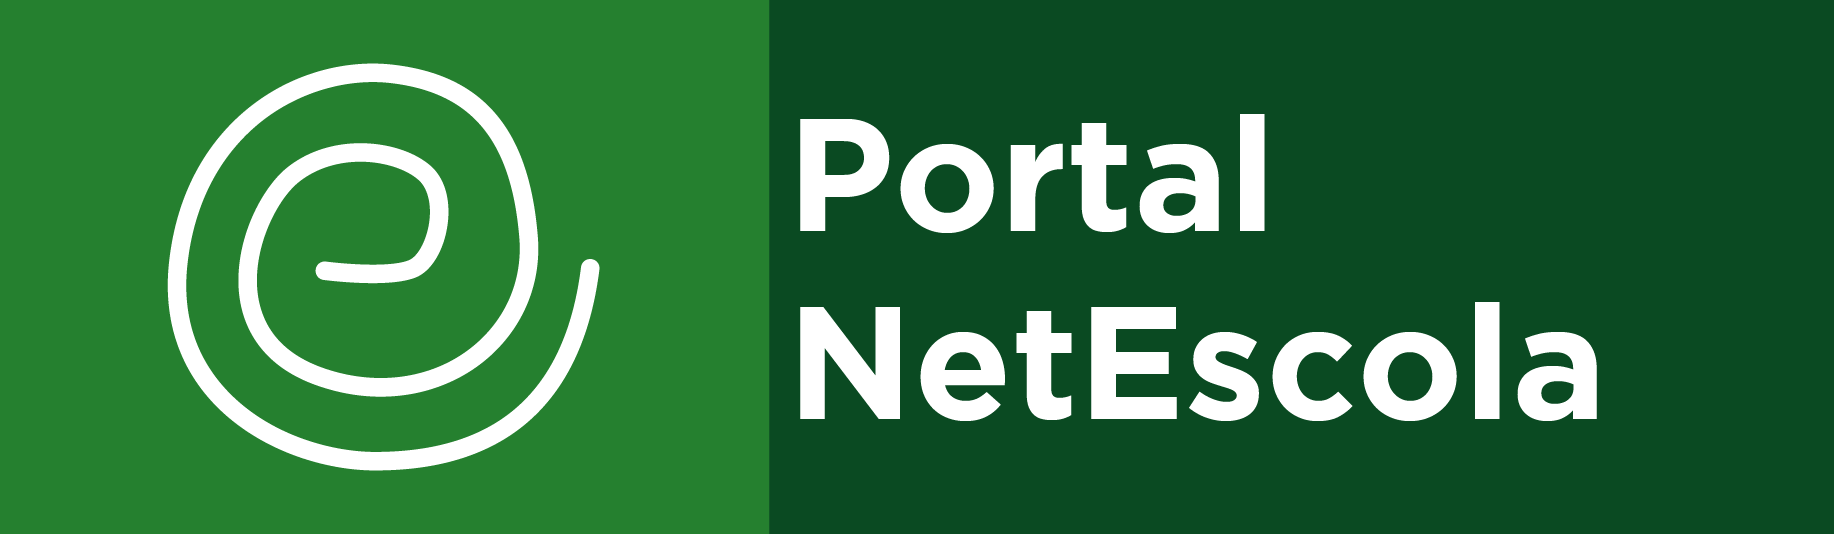 Portal NetEscola